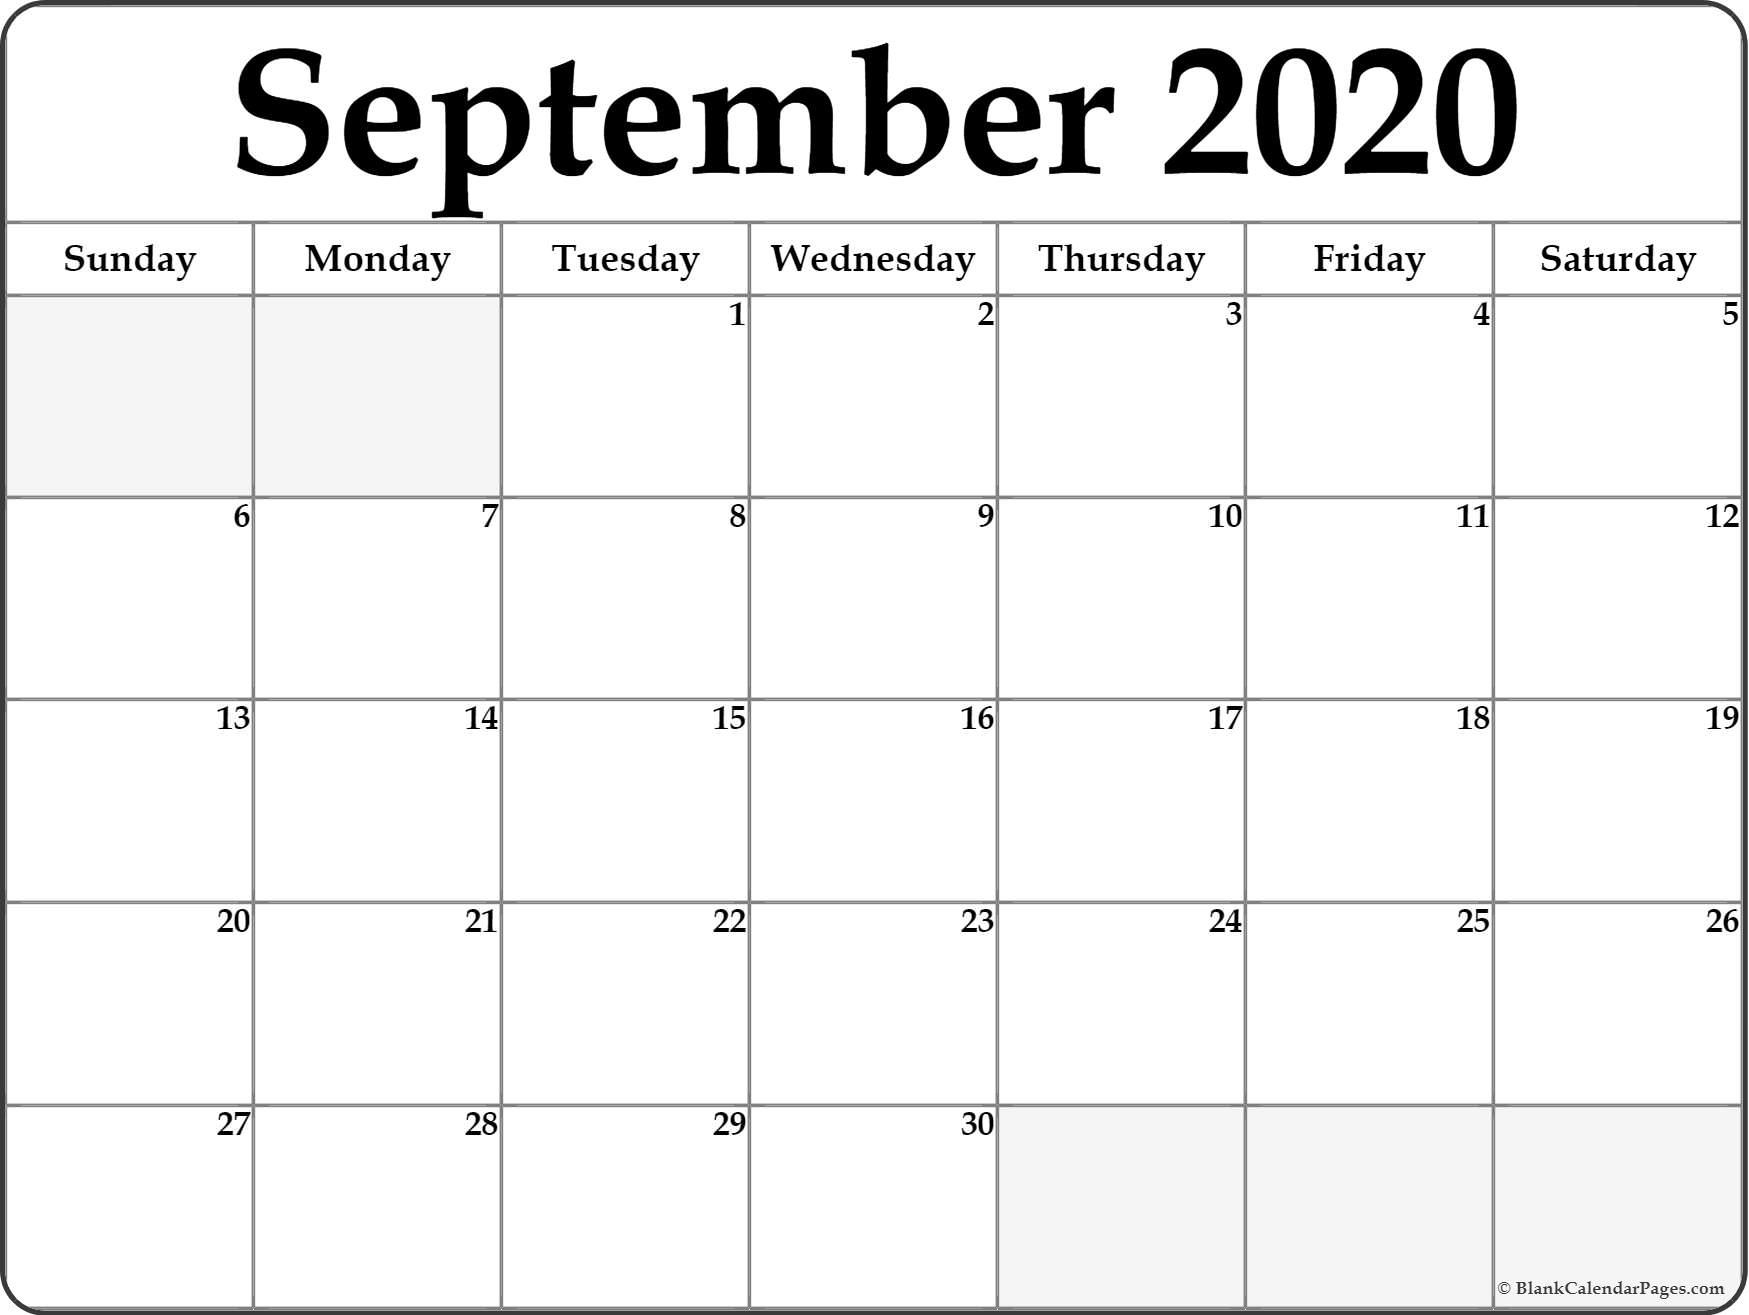 September 2020 Printable Calendar Template #2020Calendars